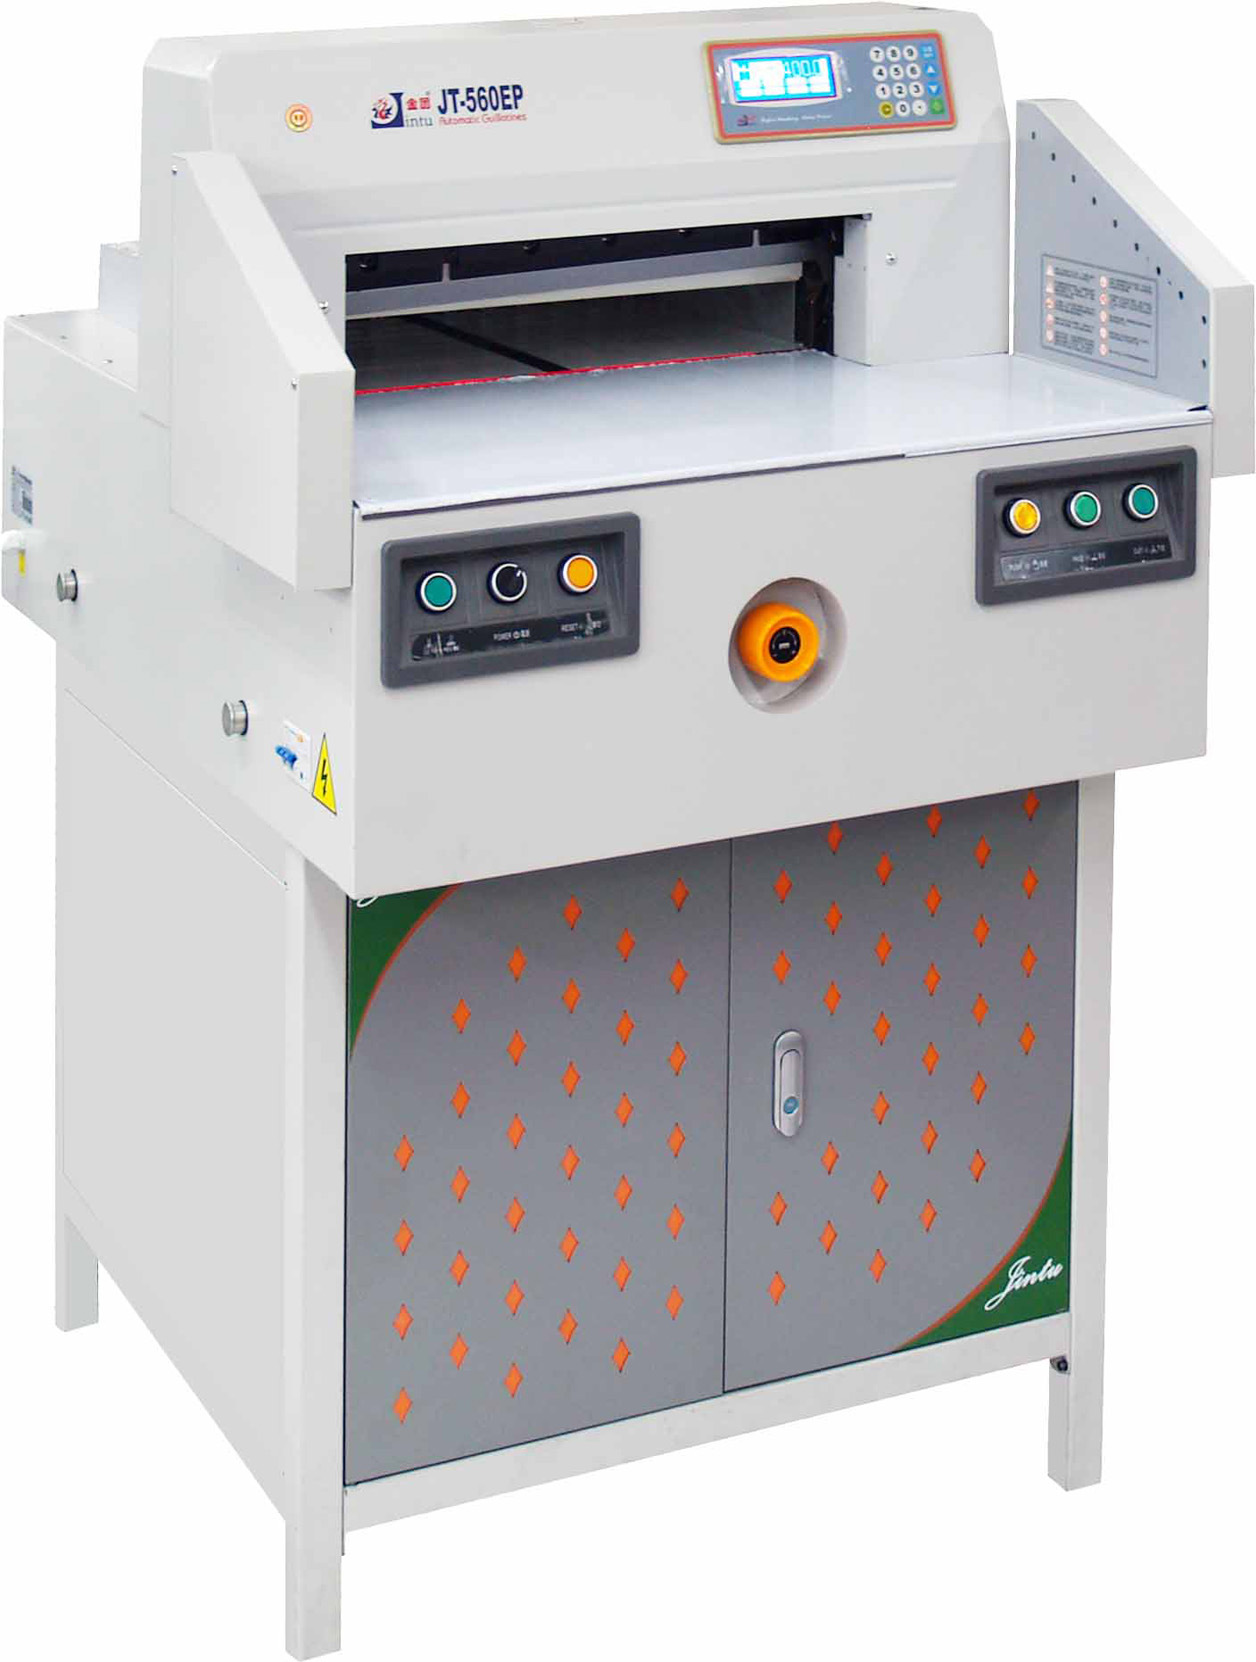 Electric Paper Cutter (JT-560EP)